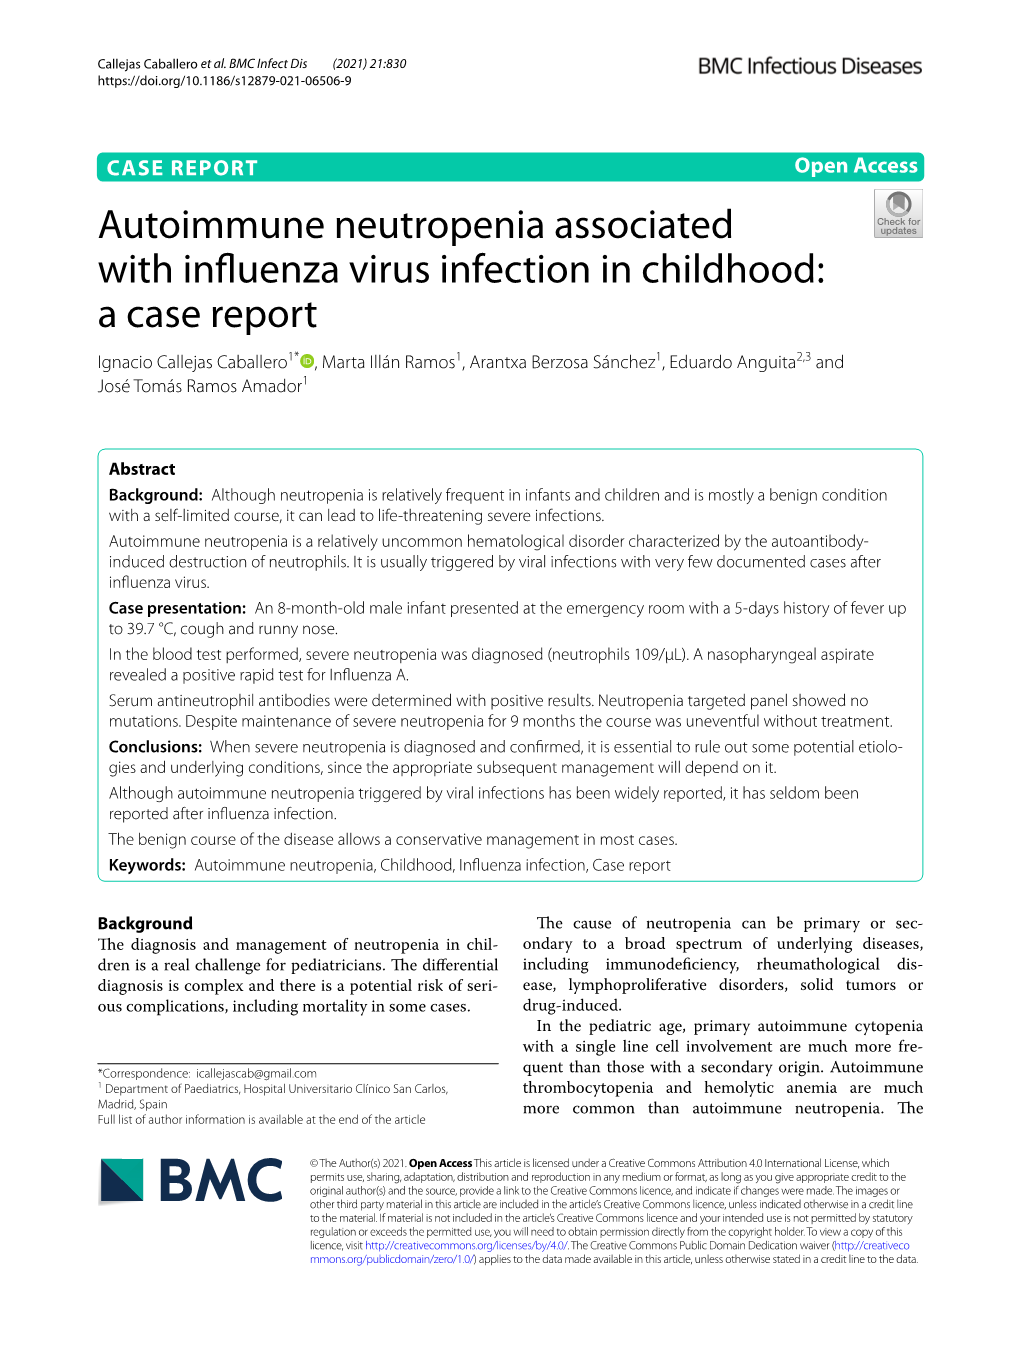 Autoimmune Neutropenia Associated With